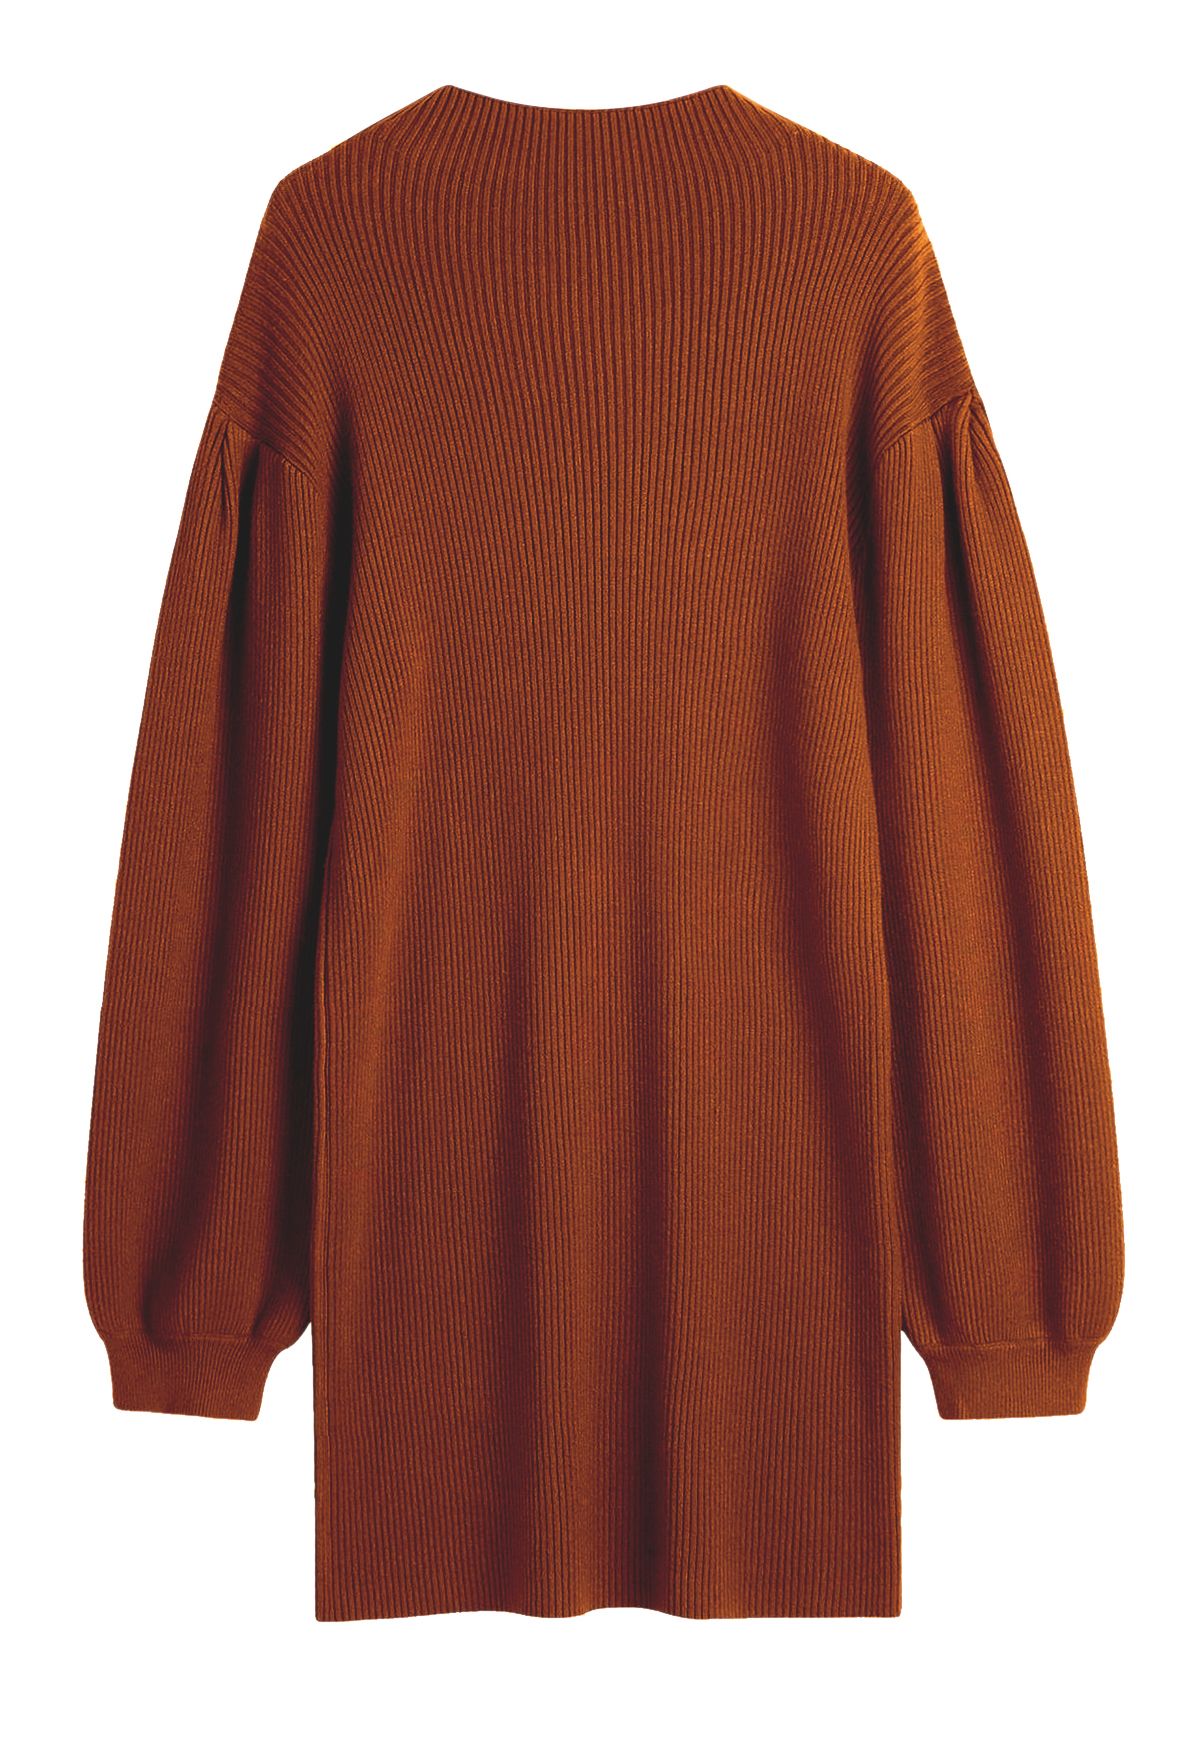 Lantern Sleeve Round Neck Ribbed Sweater Dress in Caramel